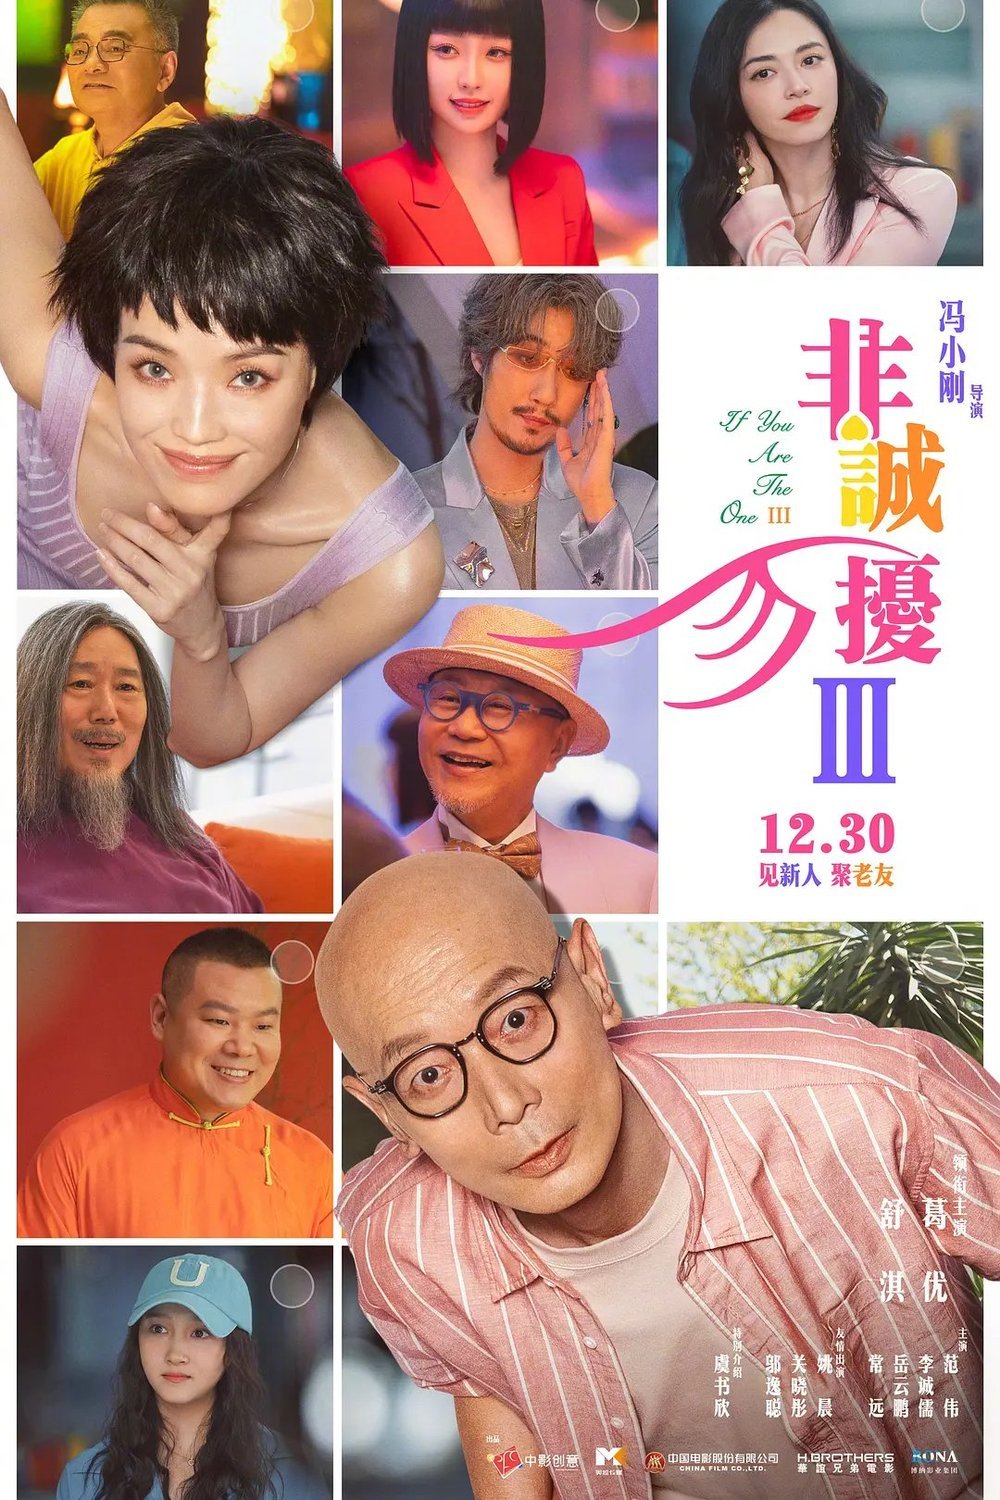 L'affiche originale du film If You Are the One 3 en mandarin